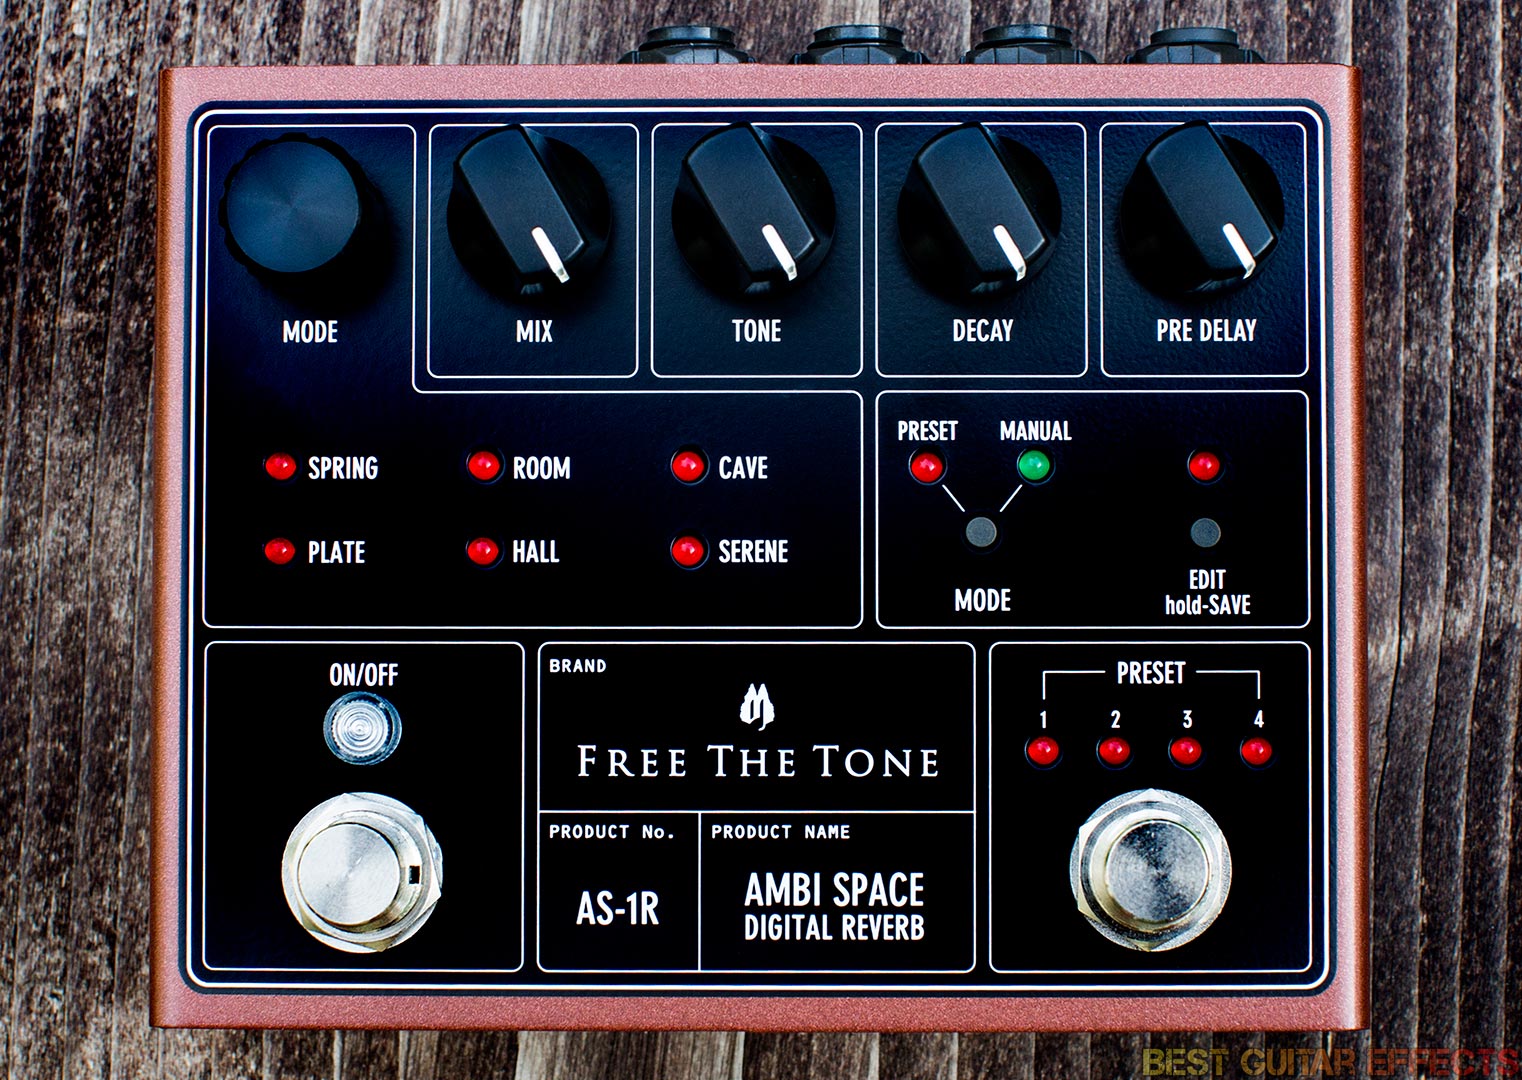 Free-The-Tone-AS-1R-Ambi-Space-Digital-Reverb-07.jpg